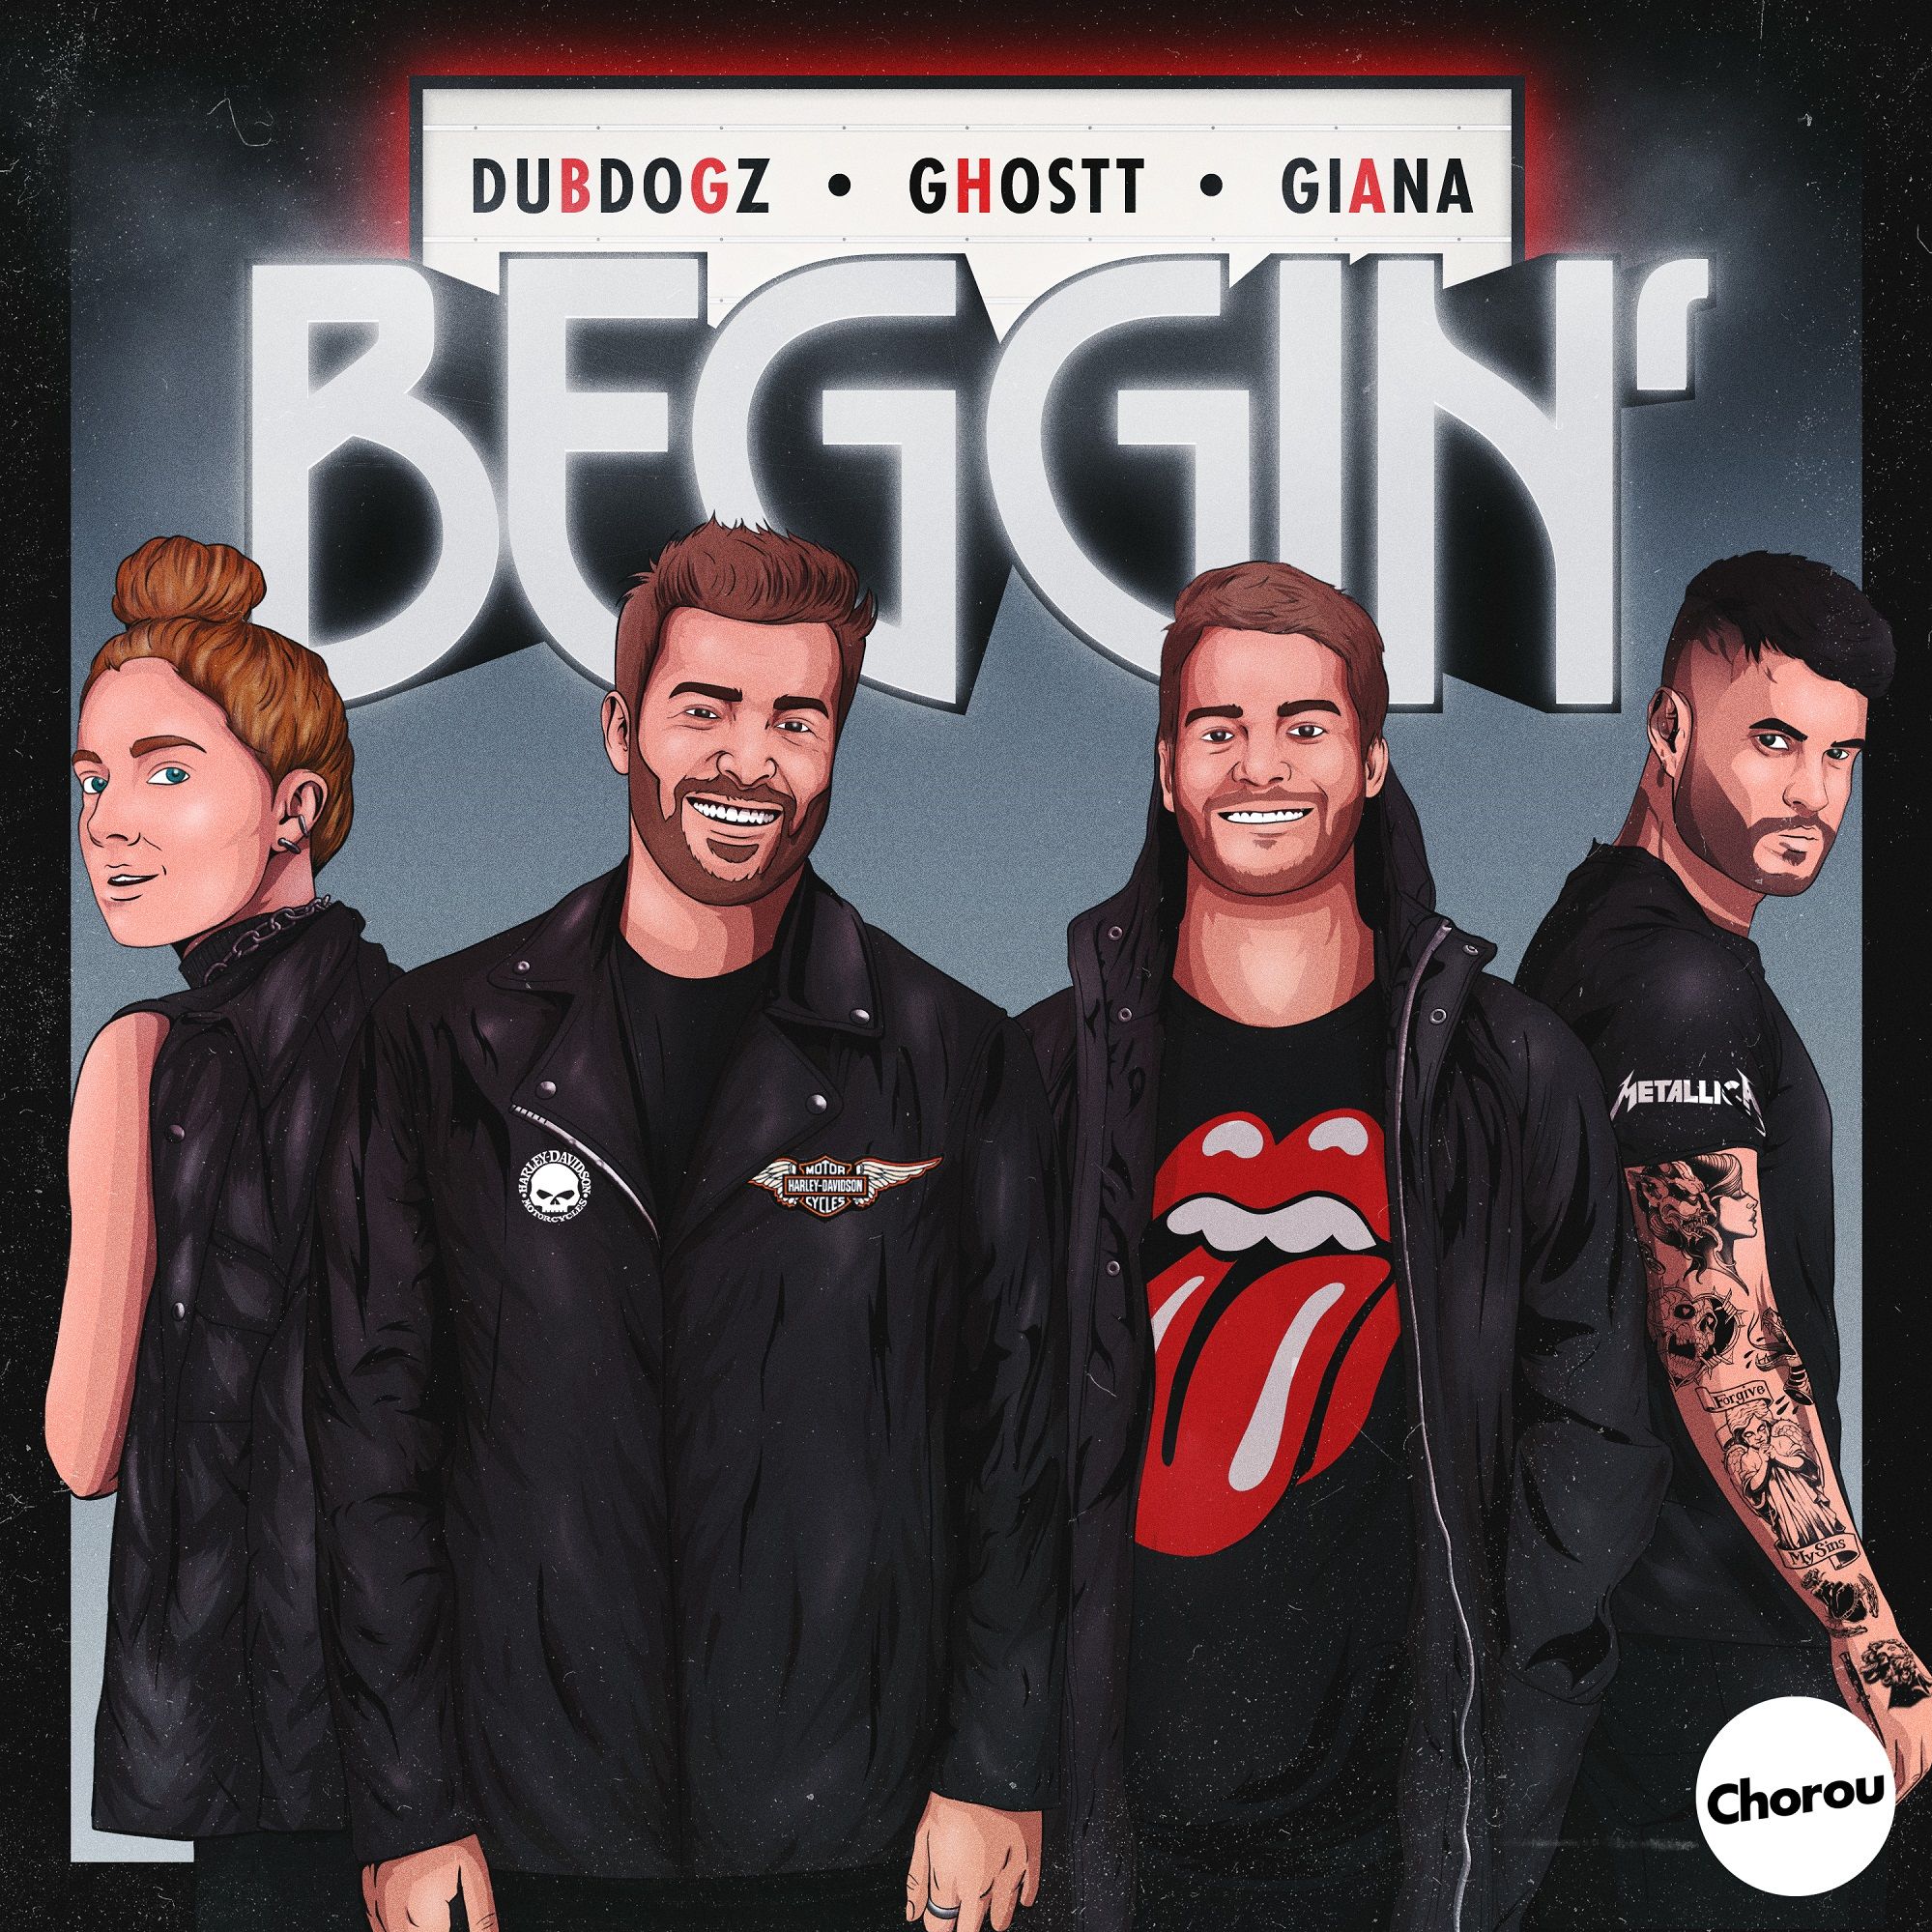 Stiahnuť ▼ Dubdogz, Ghostt - Beggin' (feat. Giana) [Chorou Records]